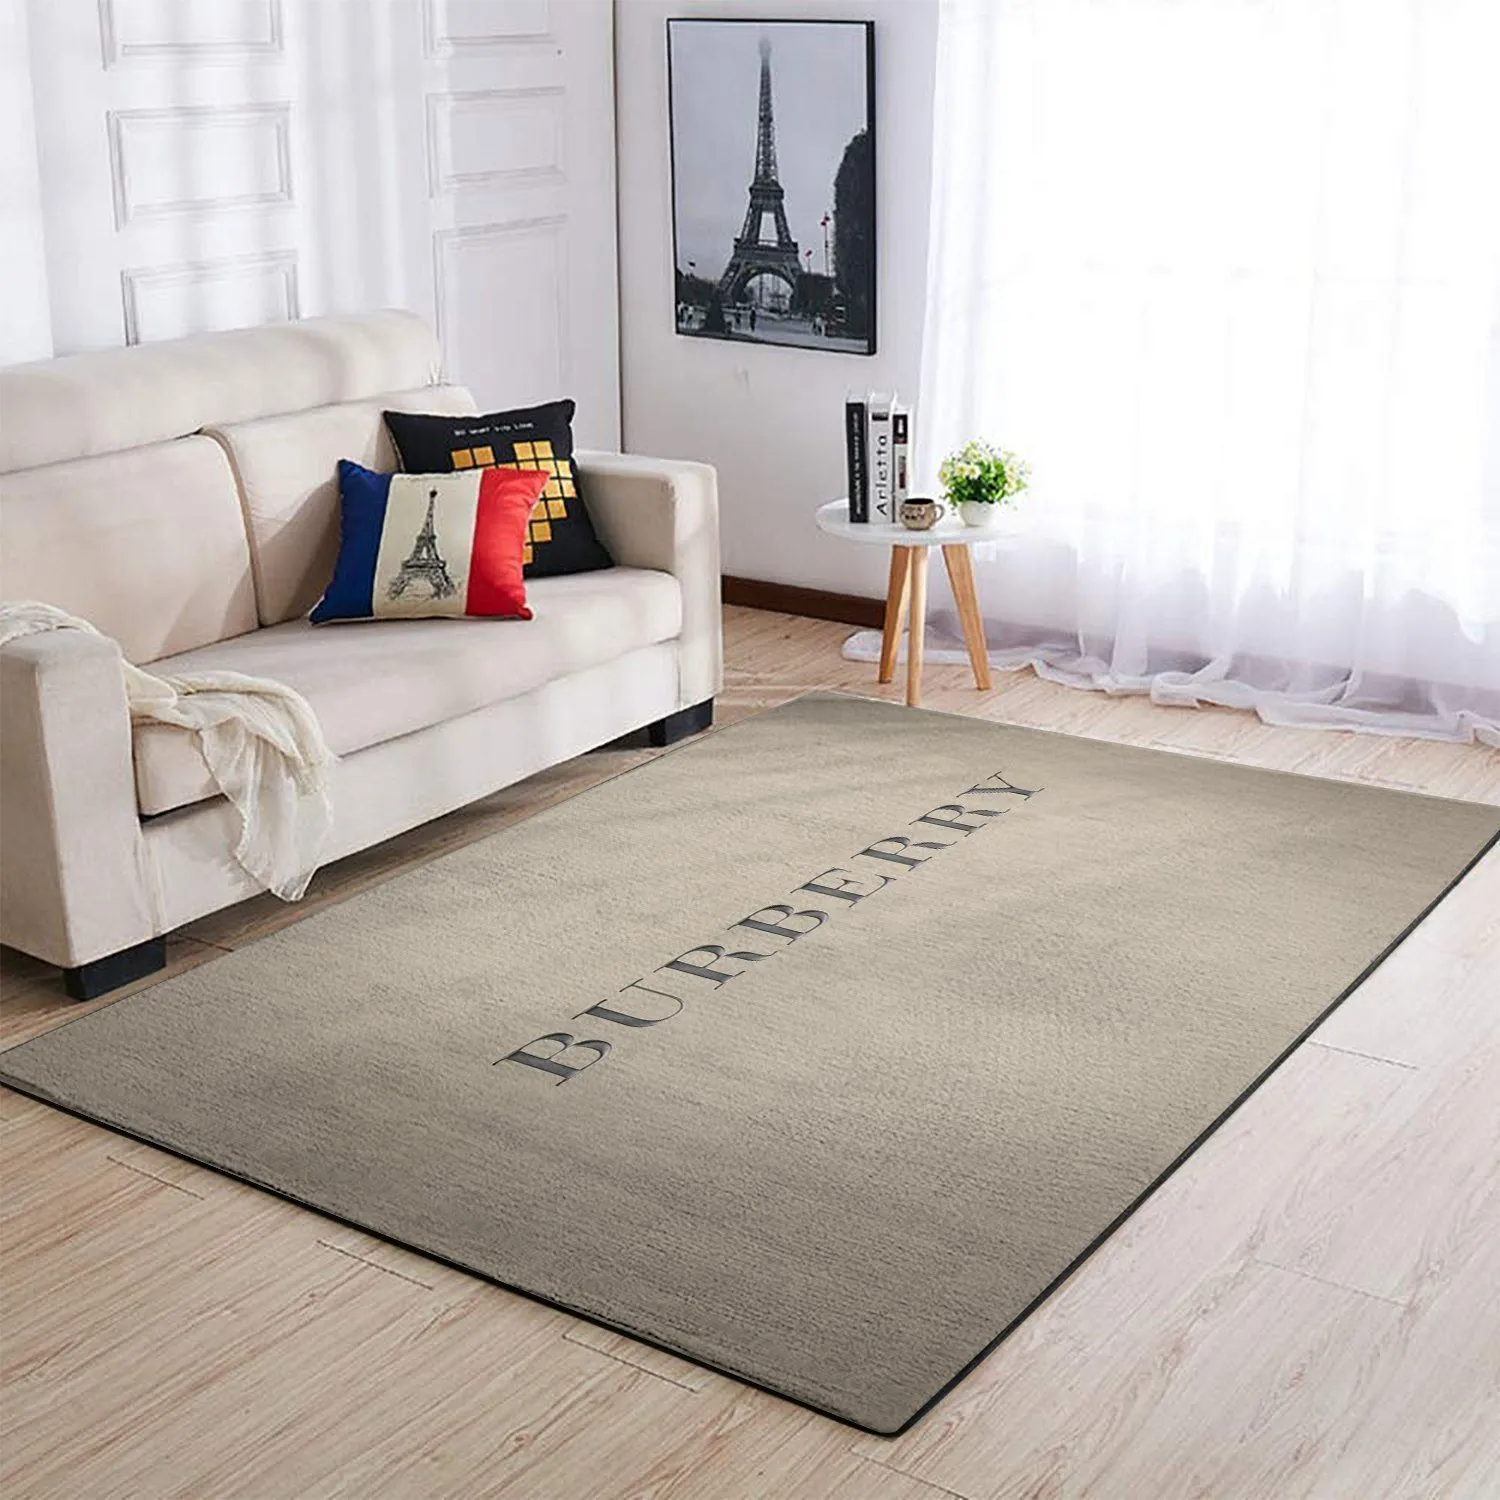 Burberry Rectangle Rug Area Carpet Luxury Door Mat Fashion Brand Home Decor